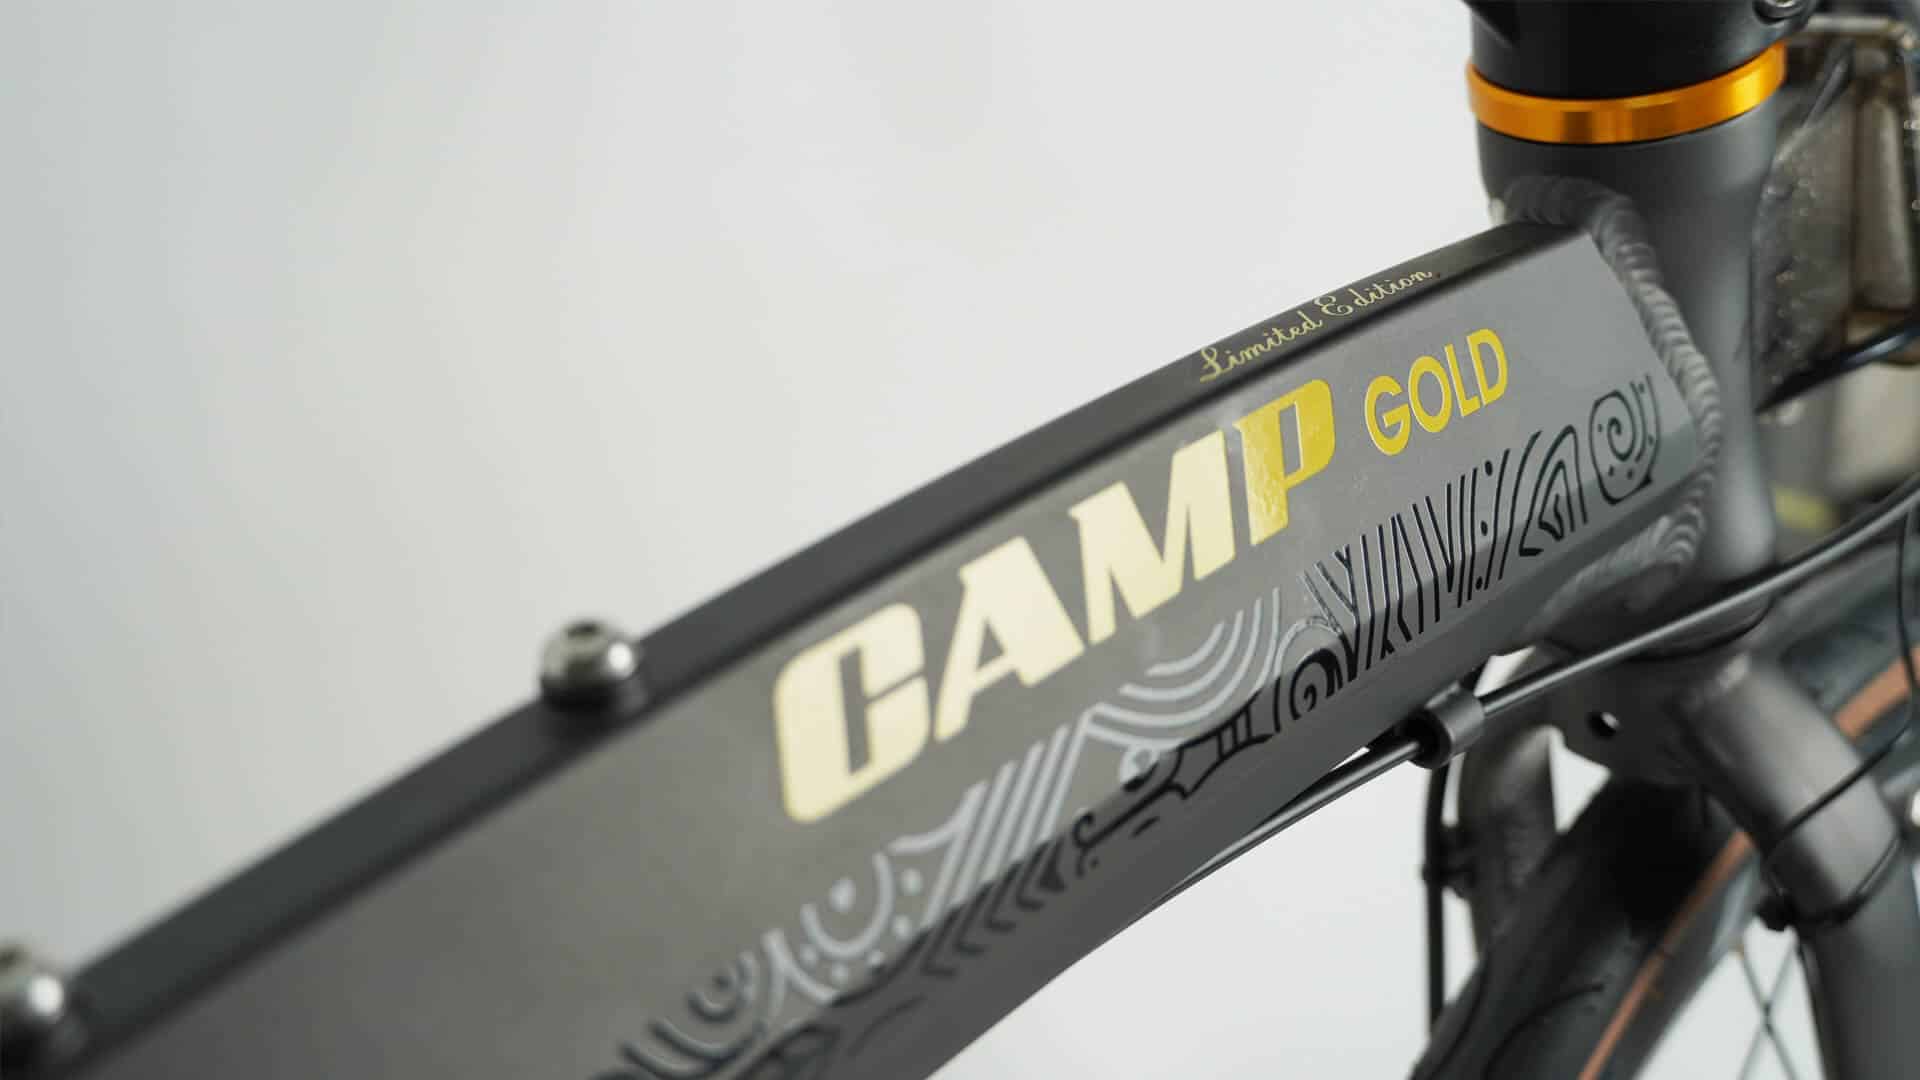 CAMP GOLD Sport (MATT GREY) foldable bicycle aluminum frame